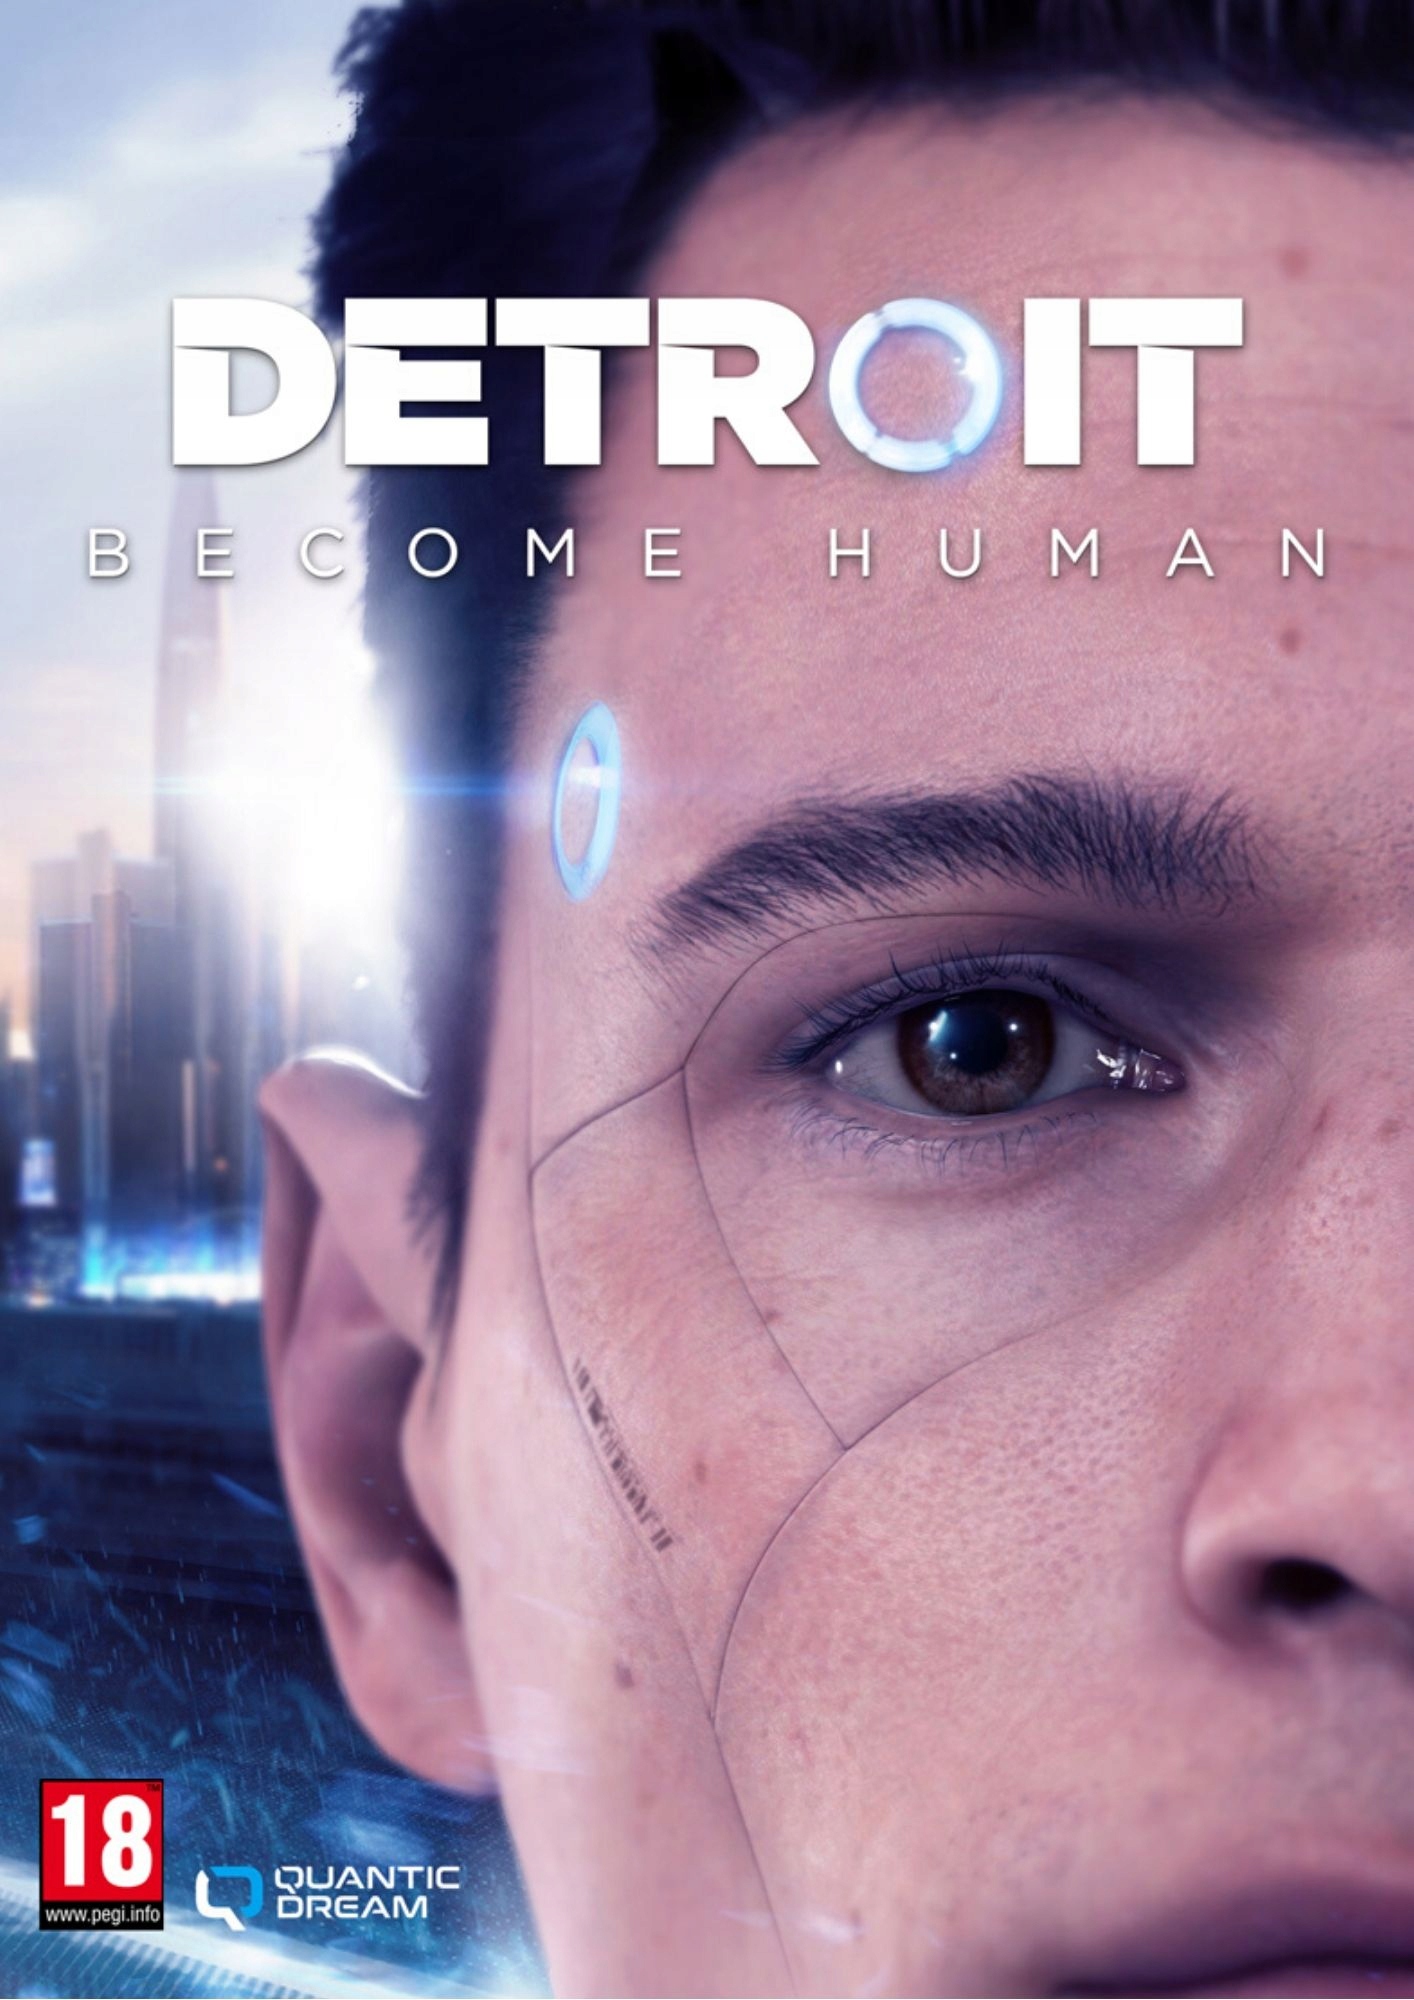 Detroit игра на пк. Детройт Беком ХЬЮМАН обложка. Детройт игра ps4. Detroit become Human обложка. Игра Detroit become Human.